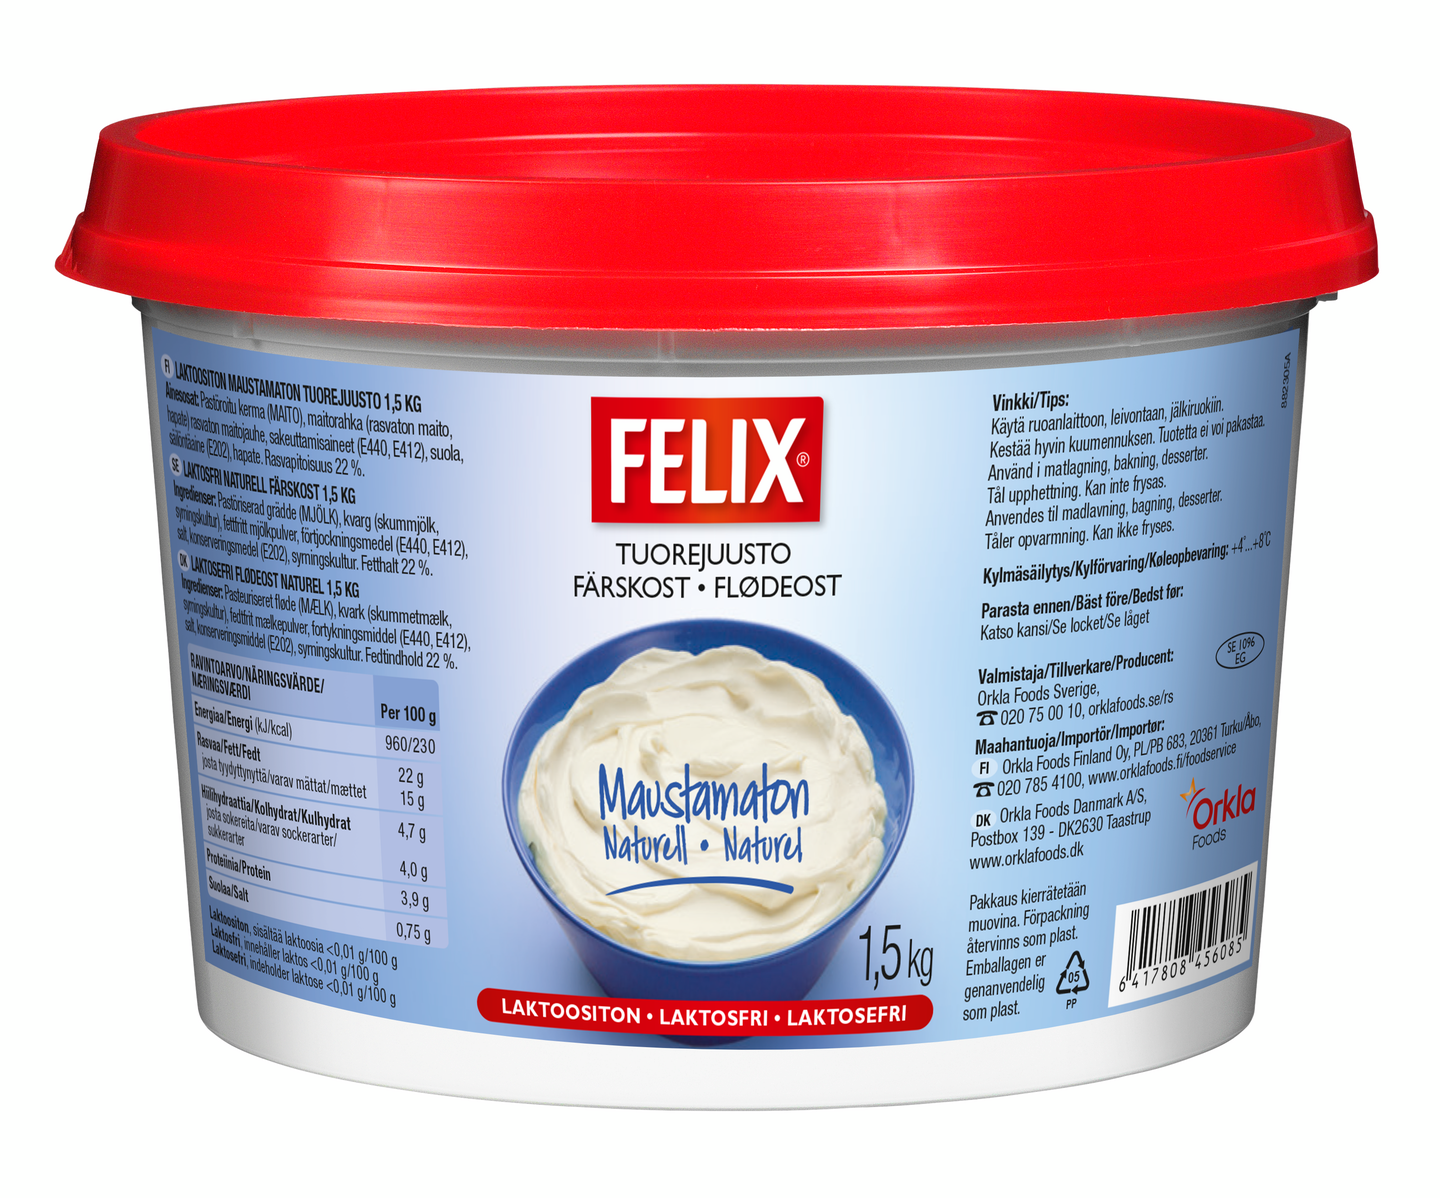 Felix tuorejuusto maustamaton 1,5kg laktoositon